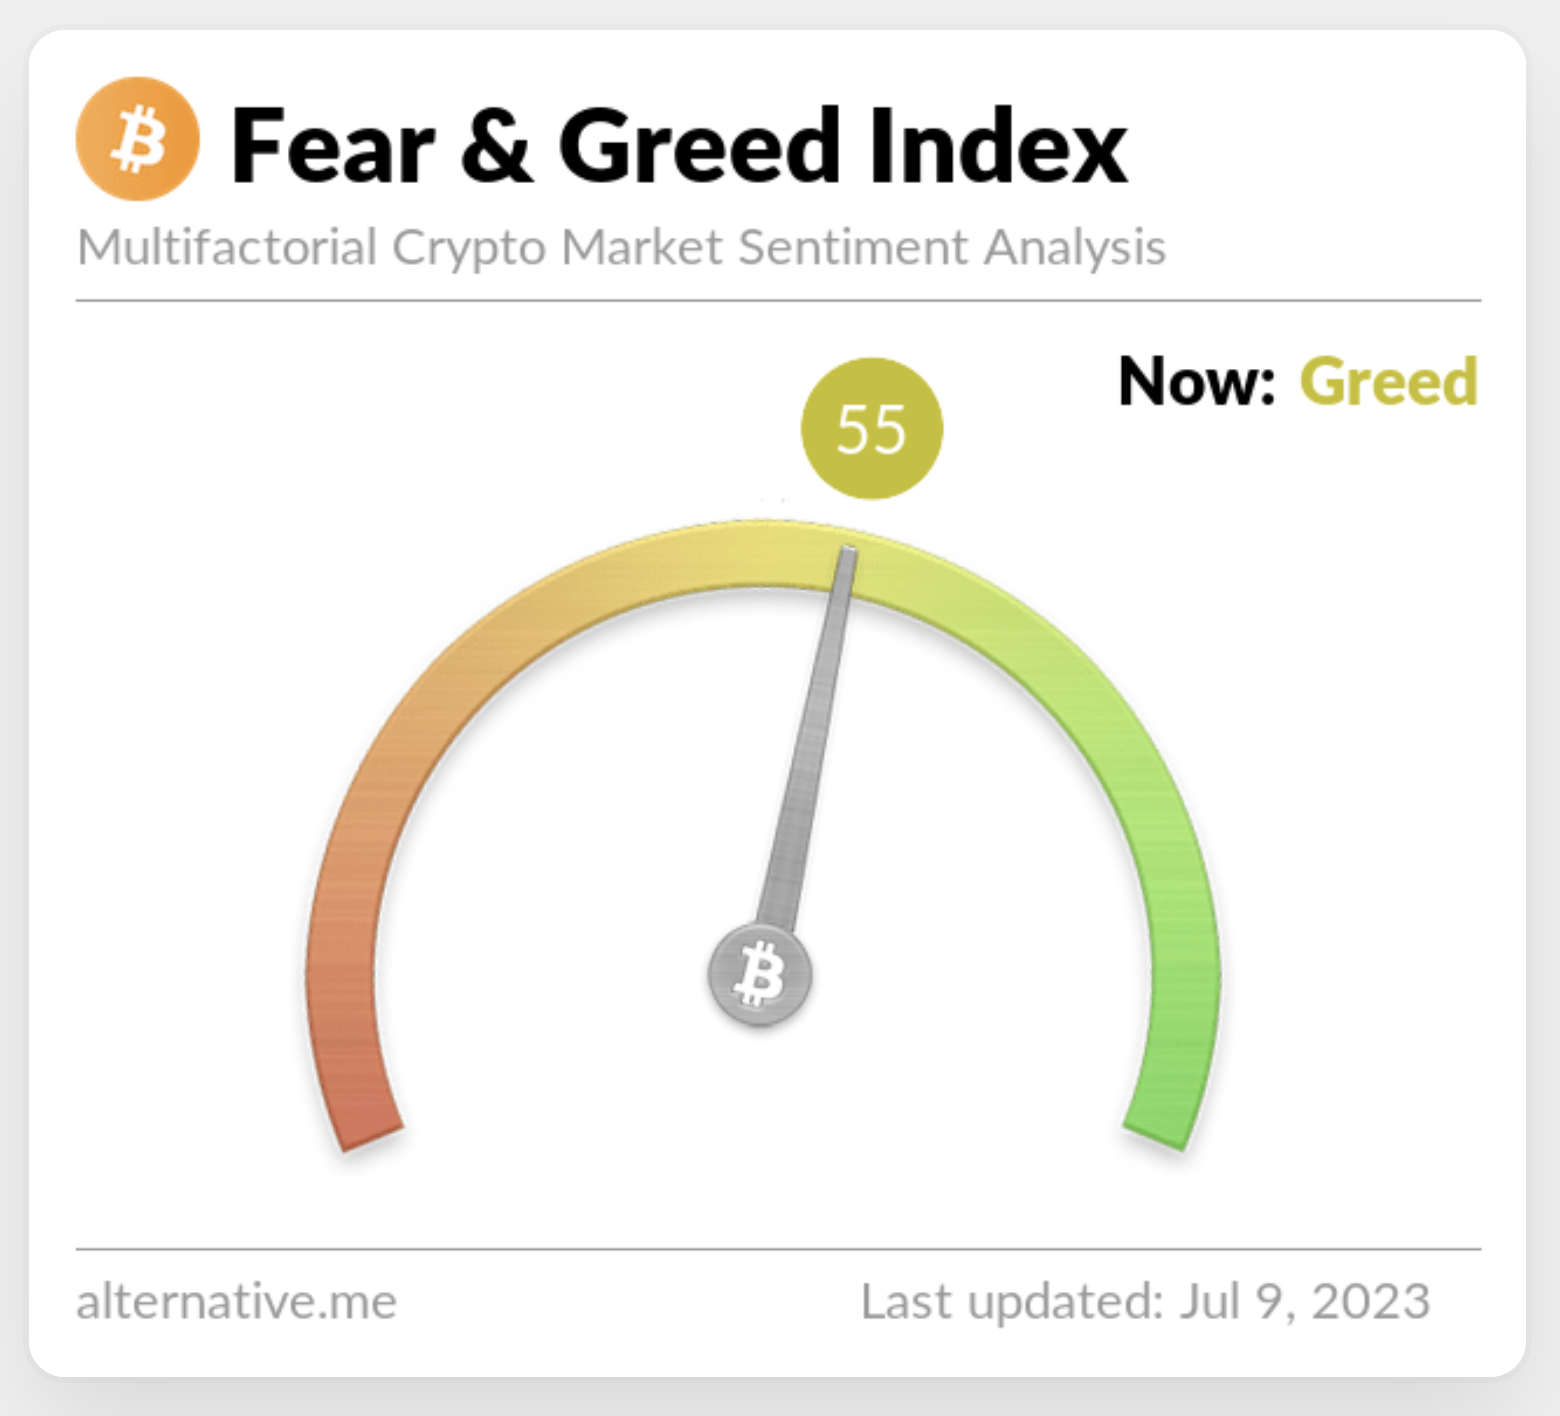 Greed Index